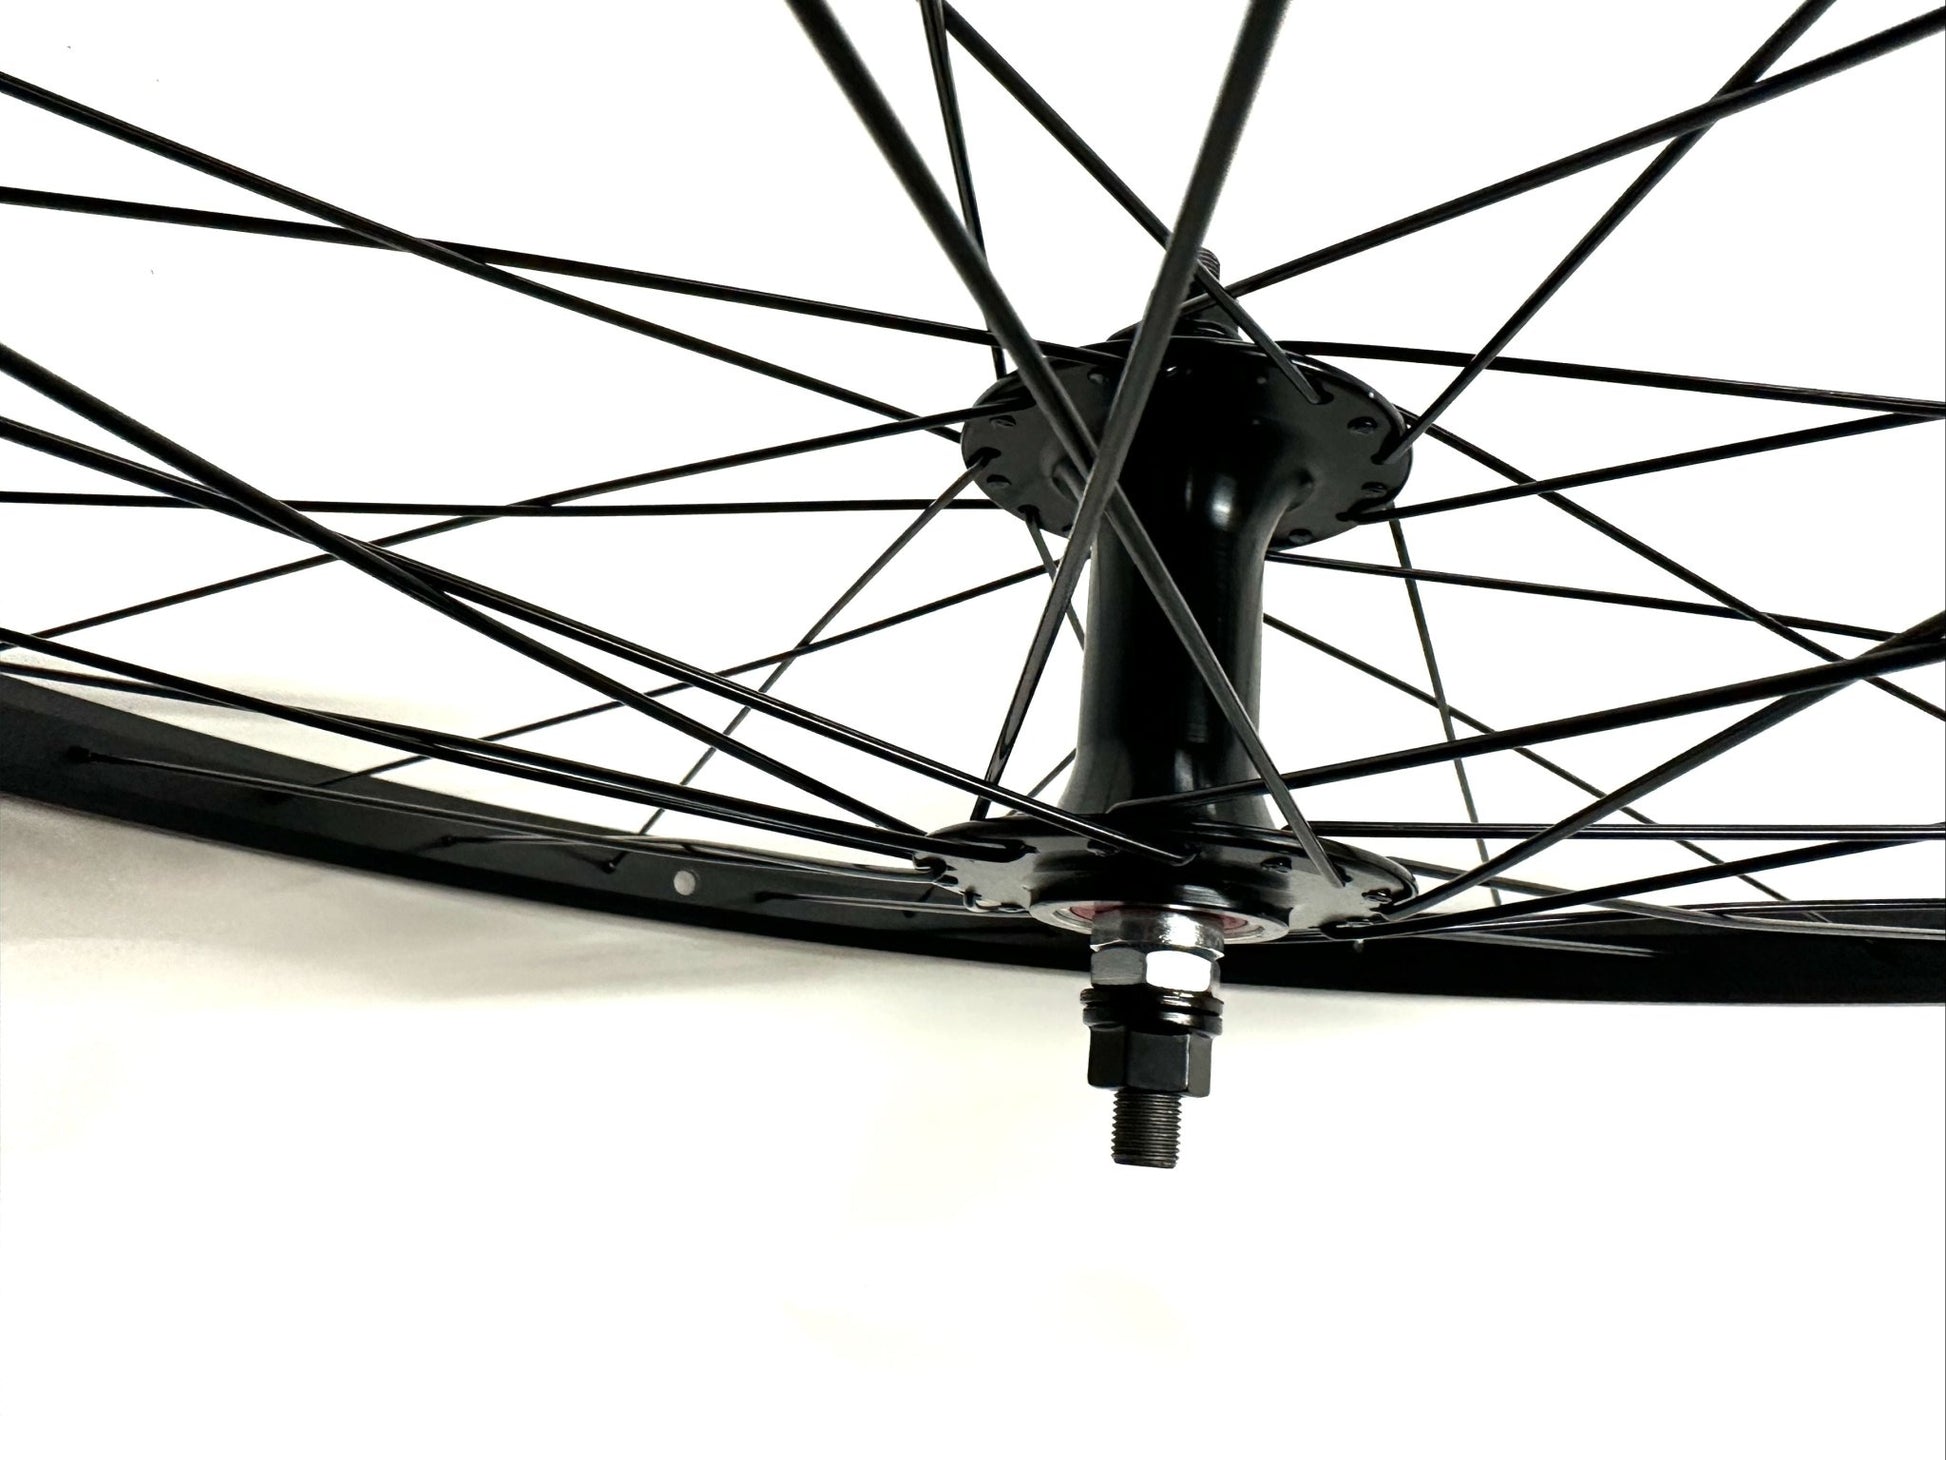 Framed 29" BMX Bike Alloy Sealed Bearing Front Wheel 100mm Bolt-On BLACK NEW - Random Bike Parts